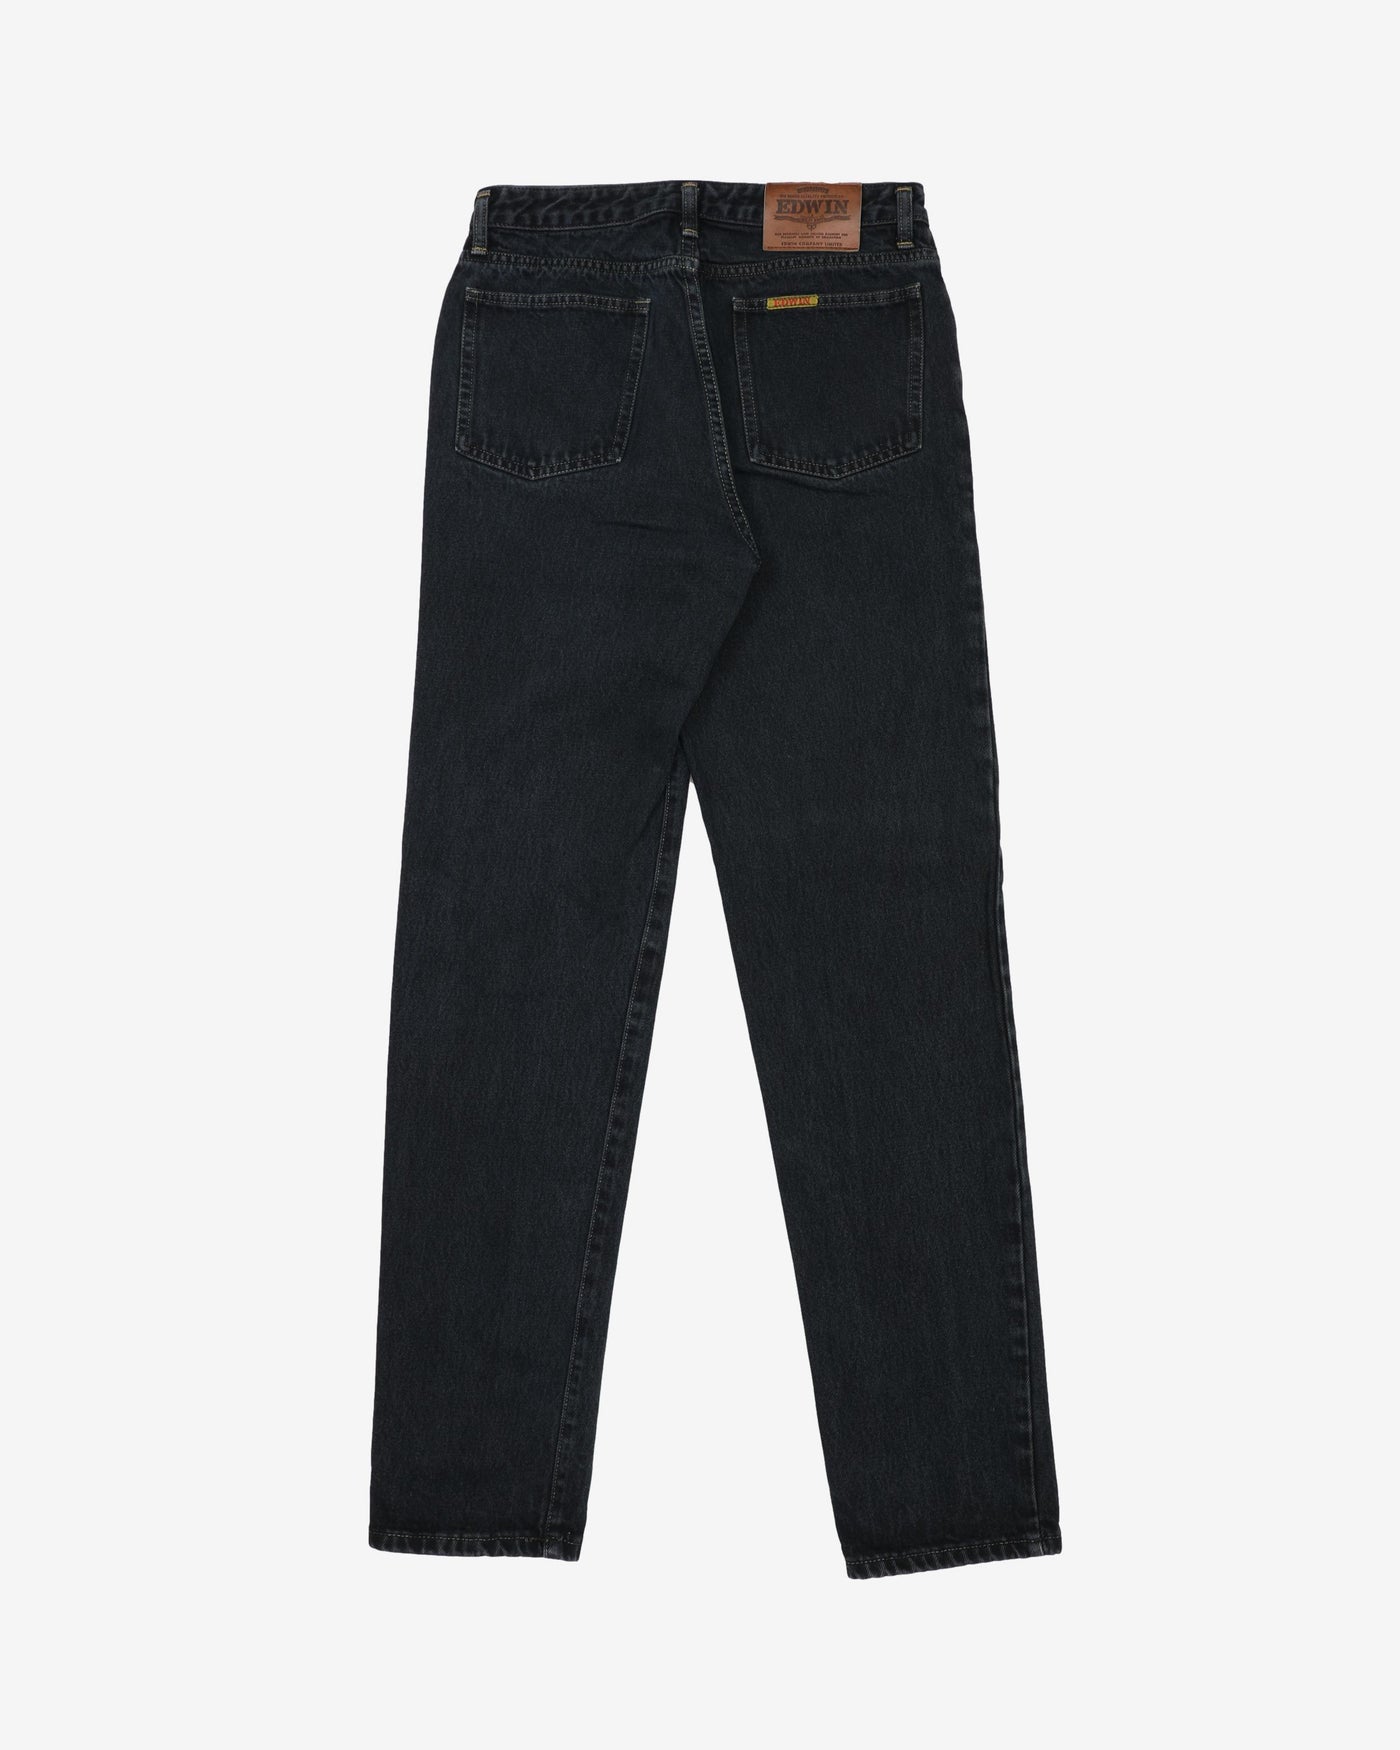 Vintage 90s Edwin Faded Black Denim Jeans - W29 L32